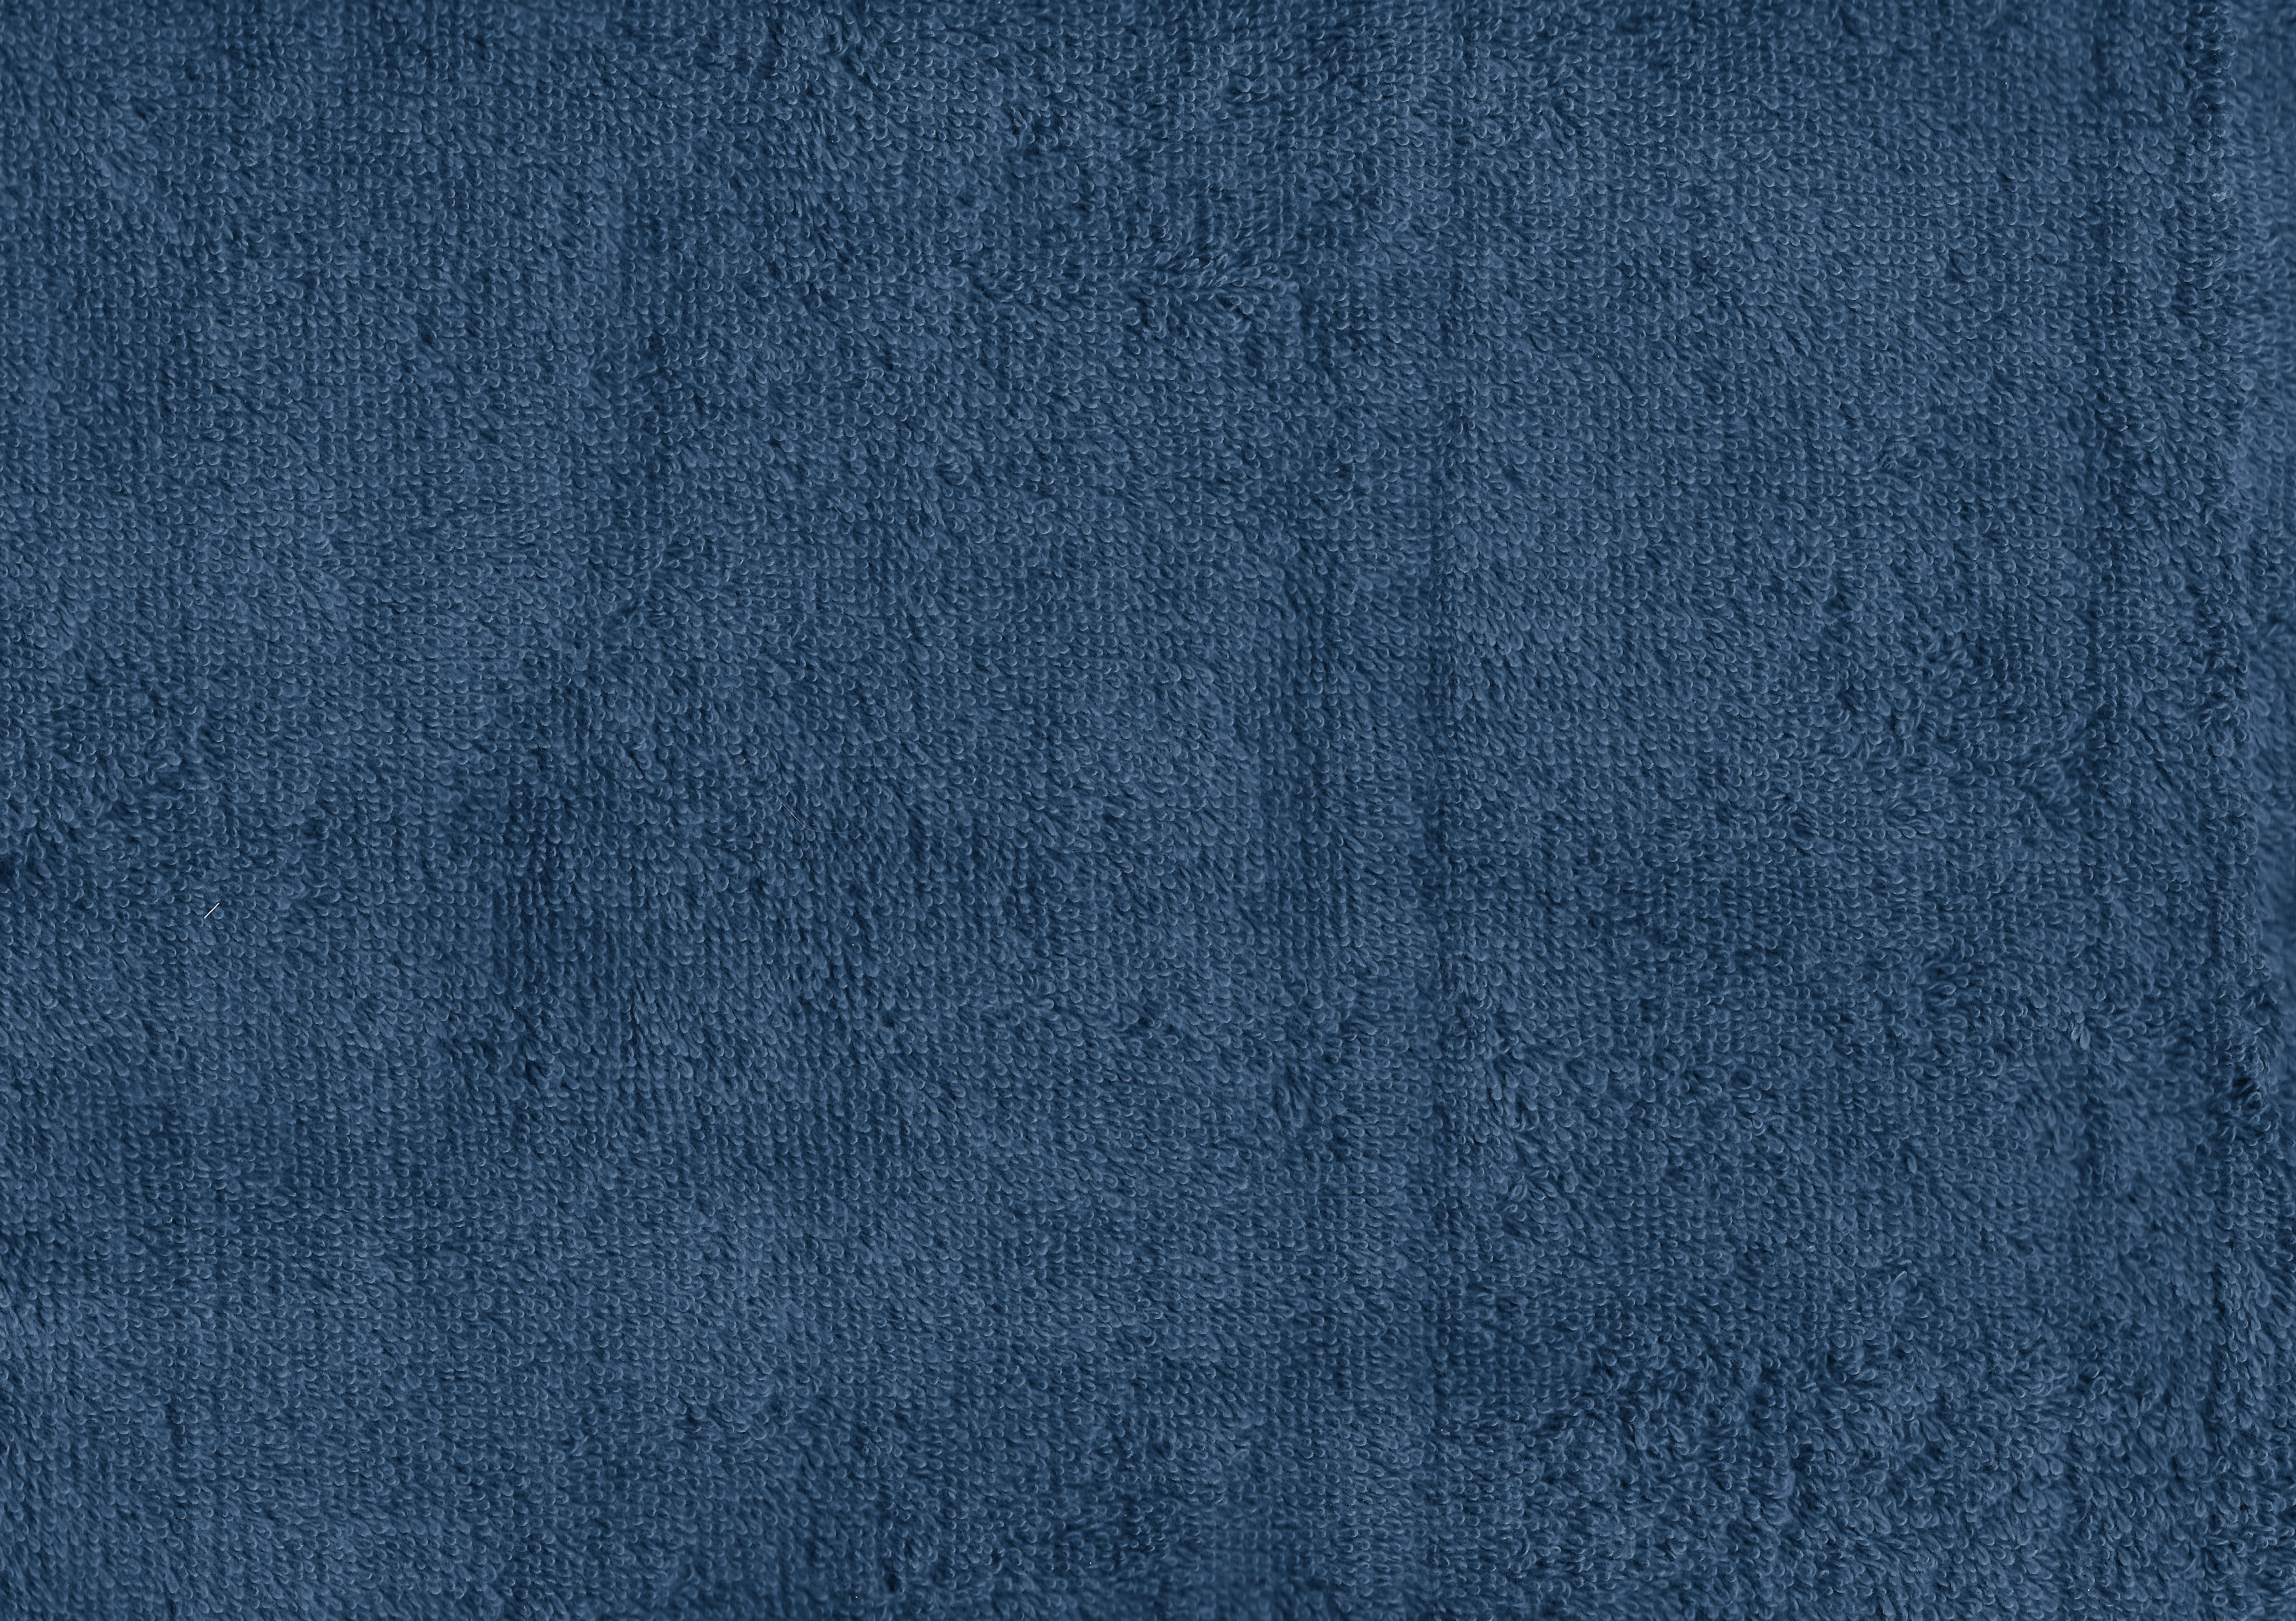 https://www.photos-public-domain.com/wp-content/uploads/2018/03/blue-gray-terry-cloth-towel-texture.jpg